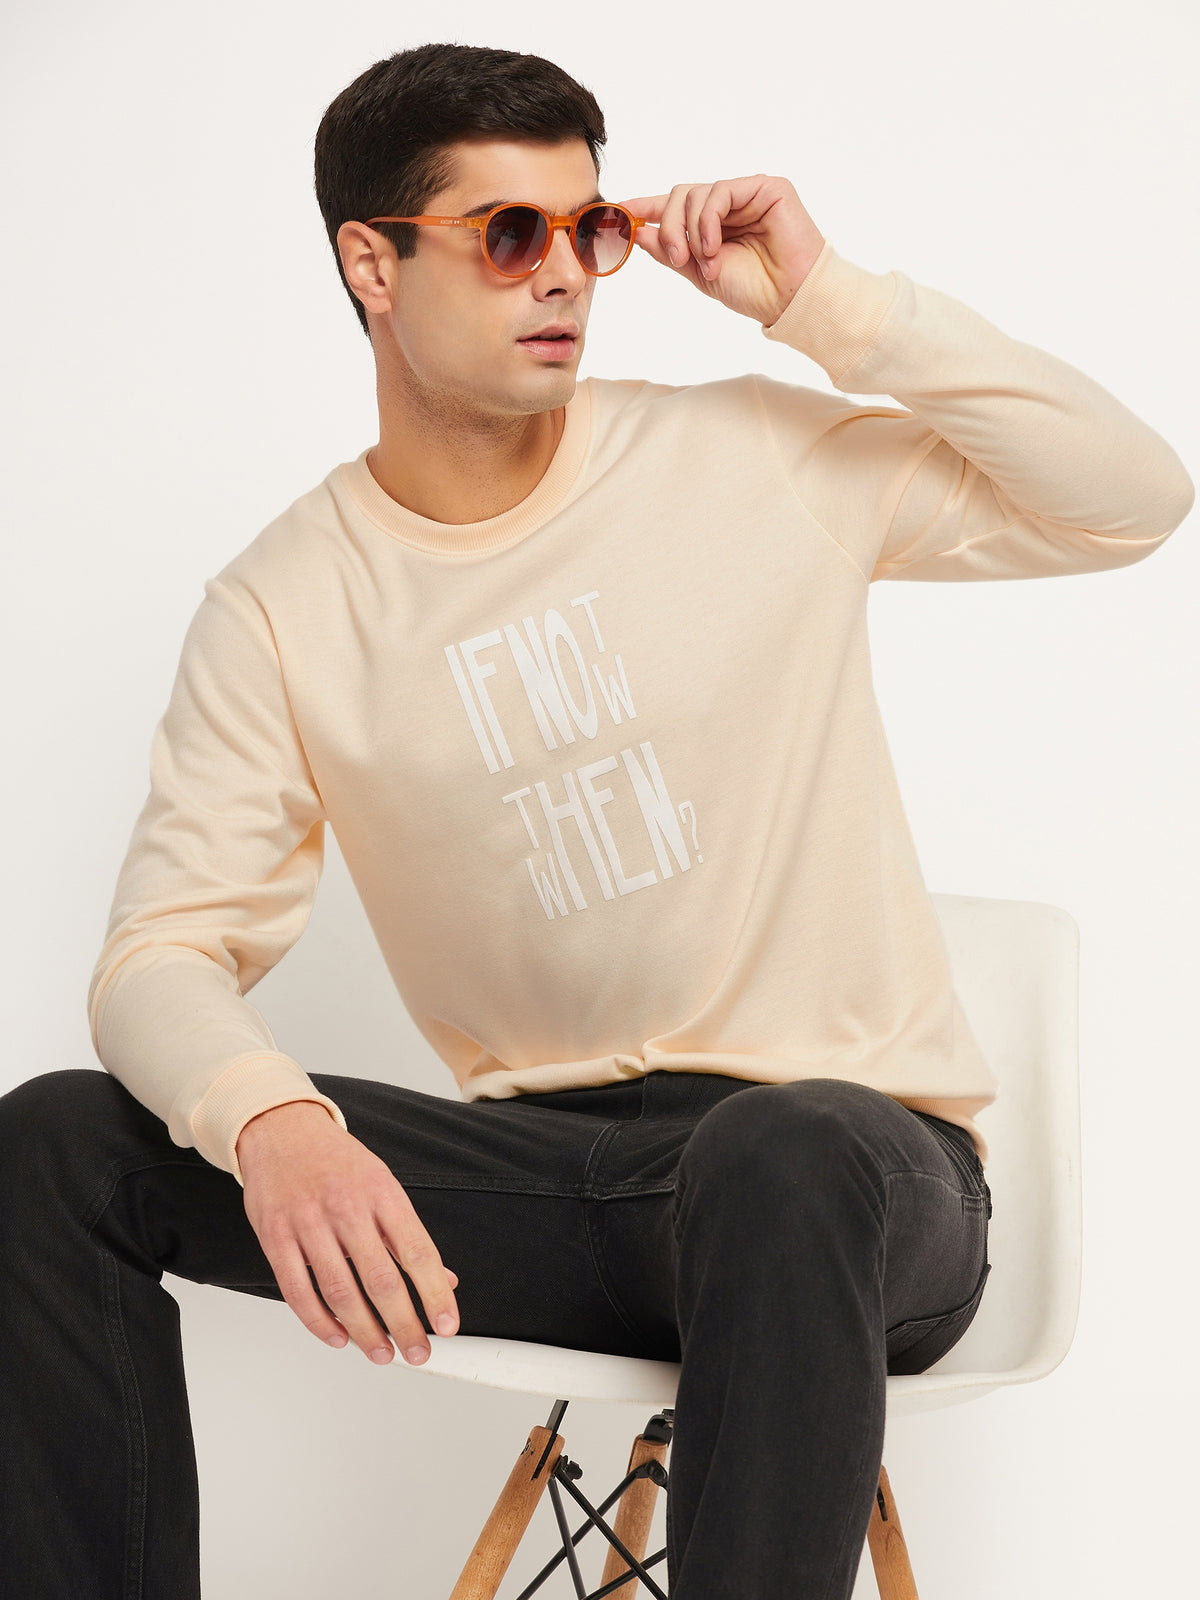 Men's Sweatshirt Off-White